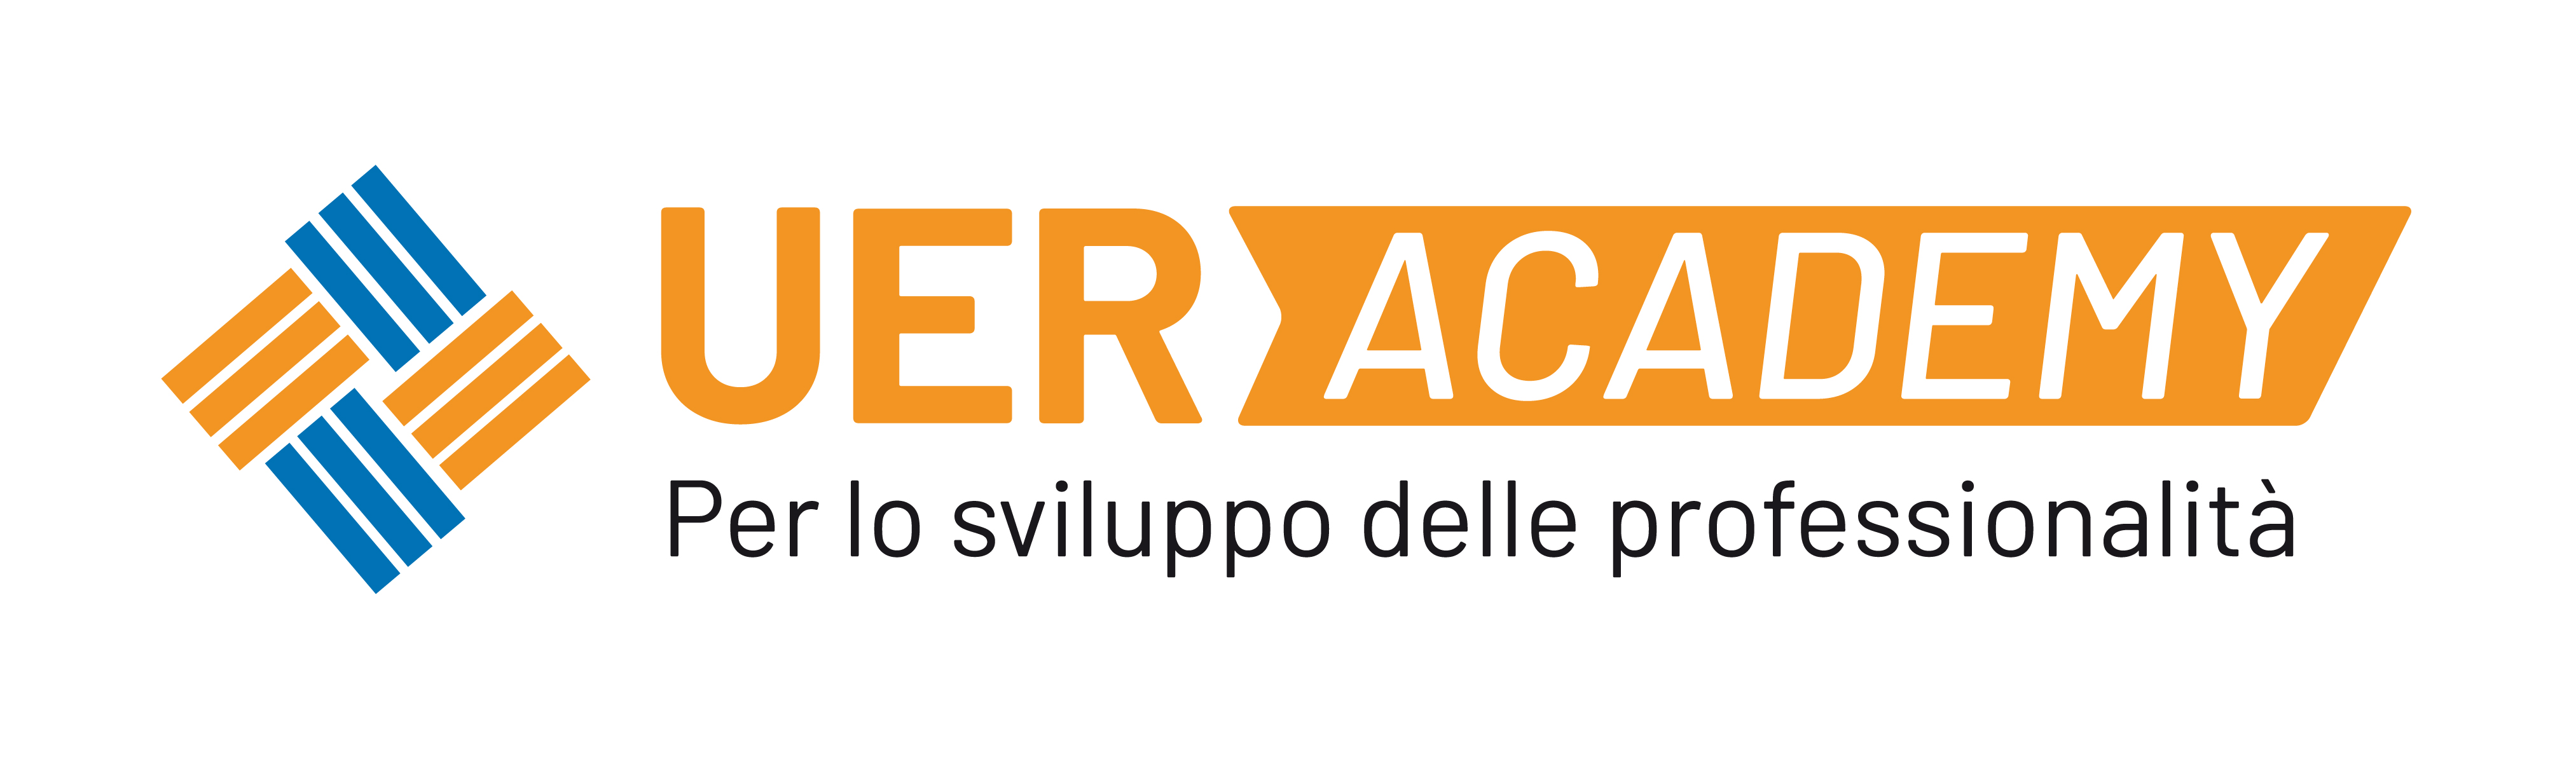 Uer Academy